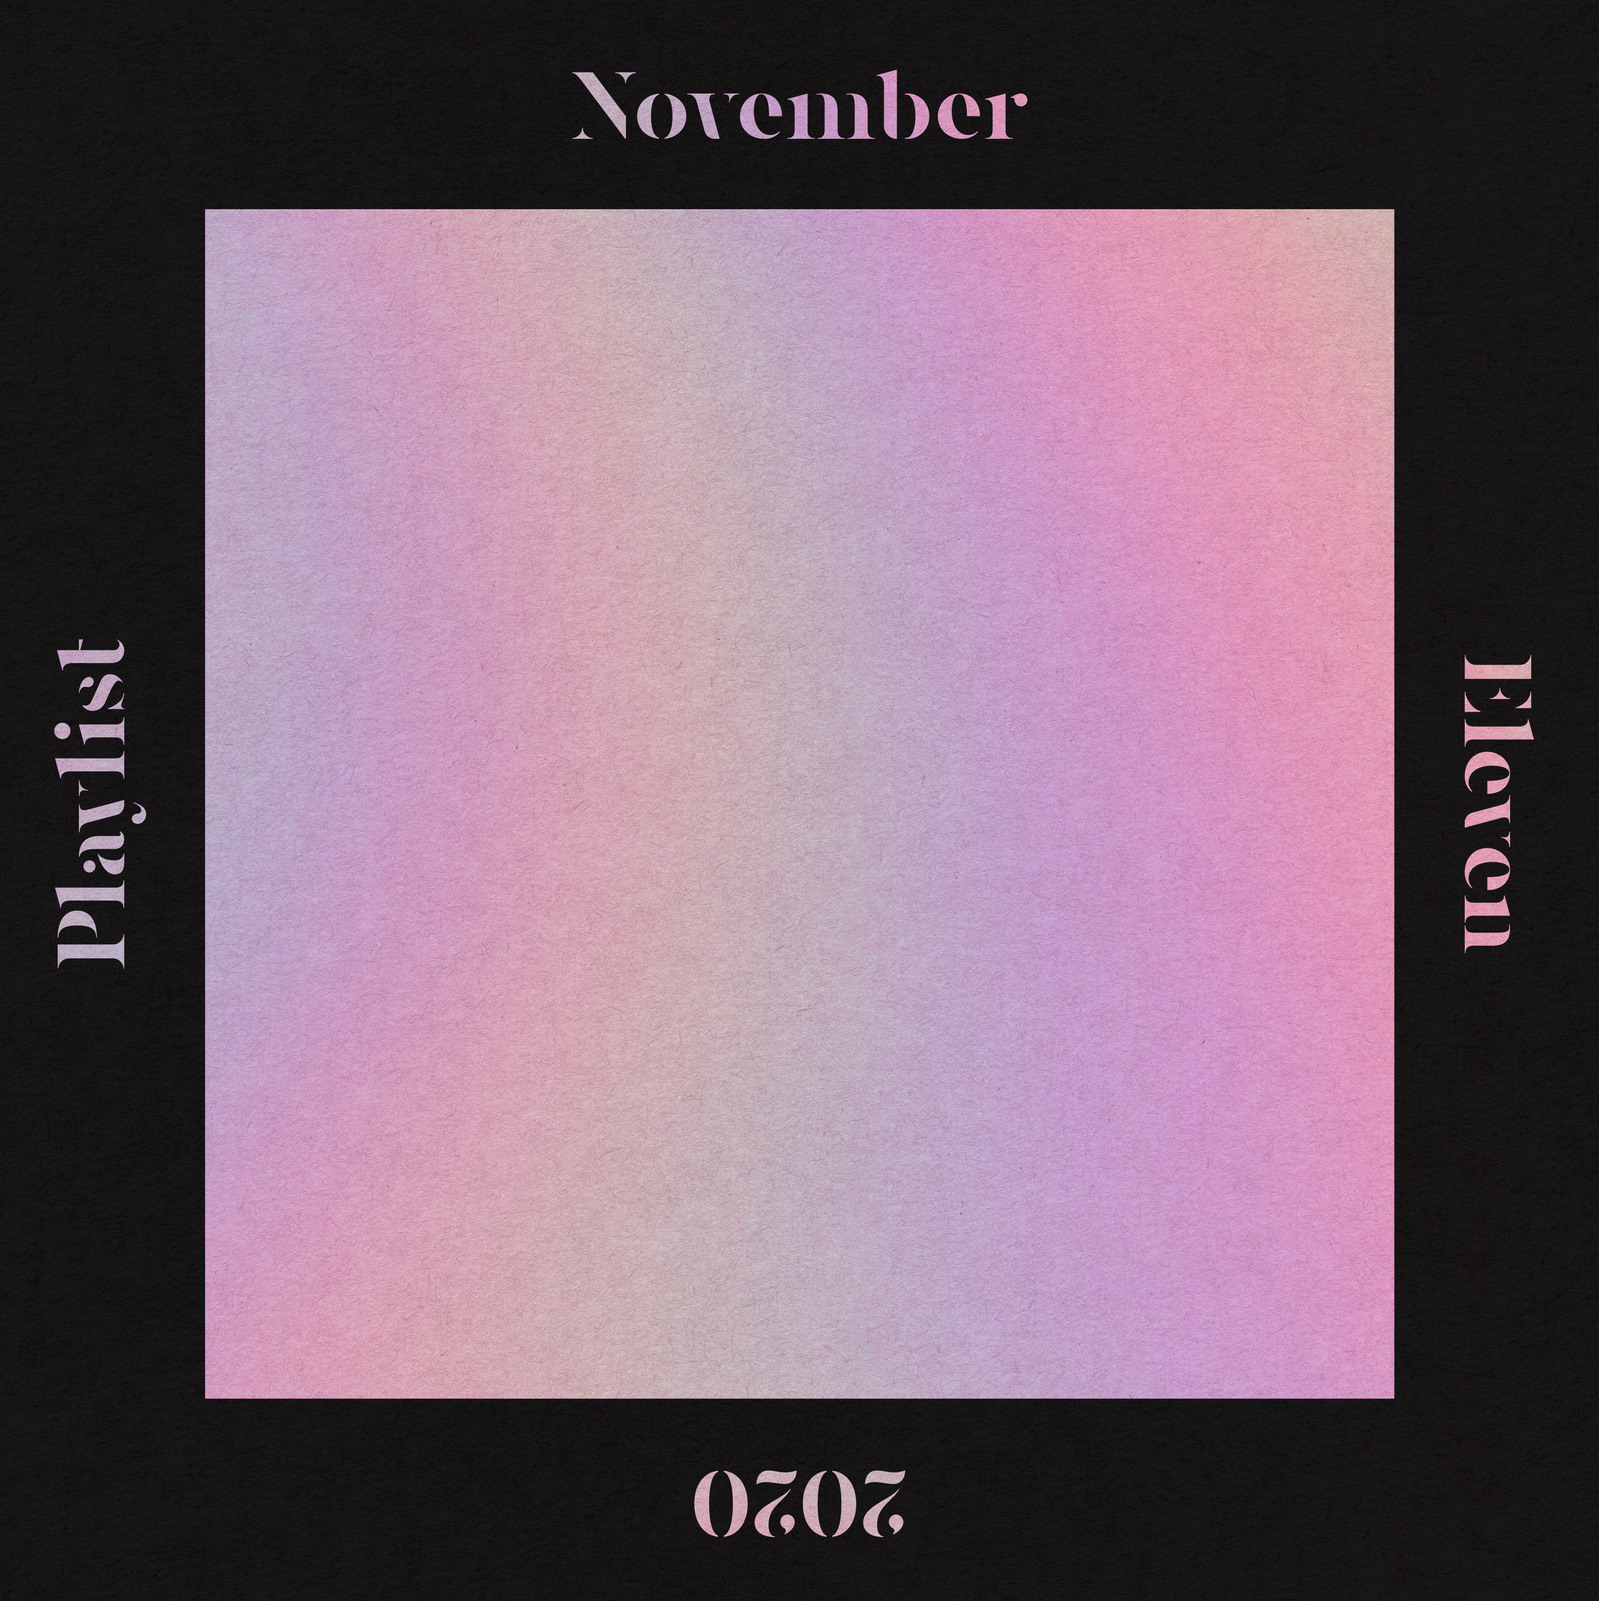 Cover design for November playlist.